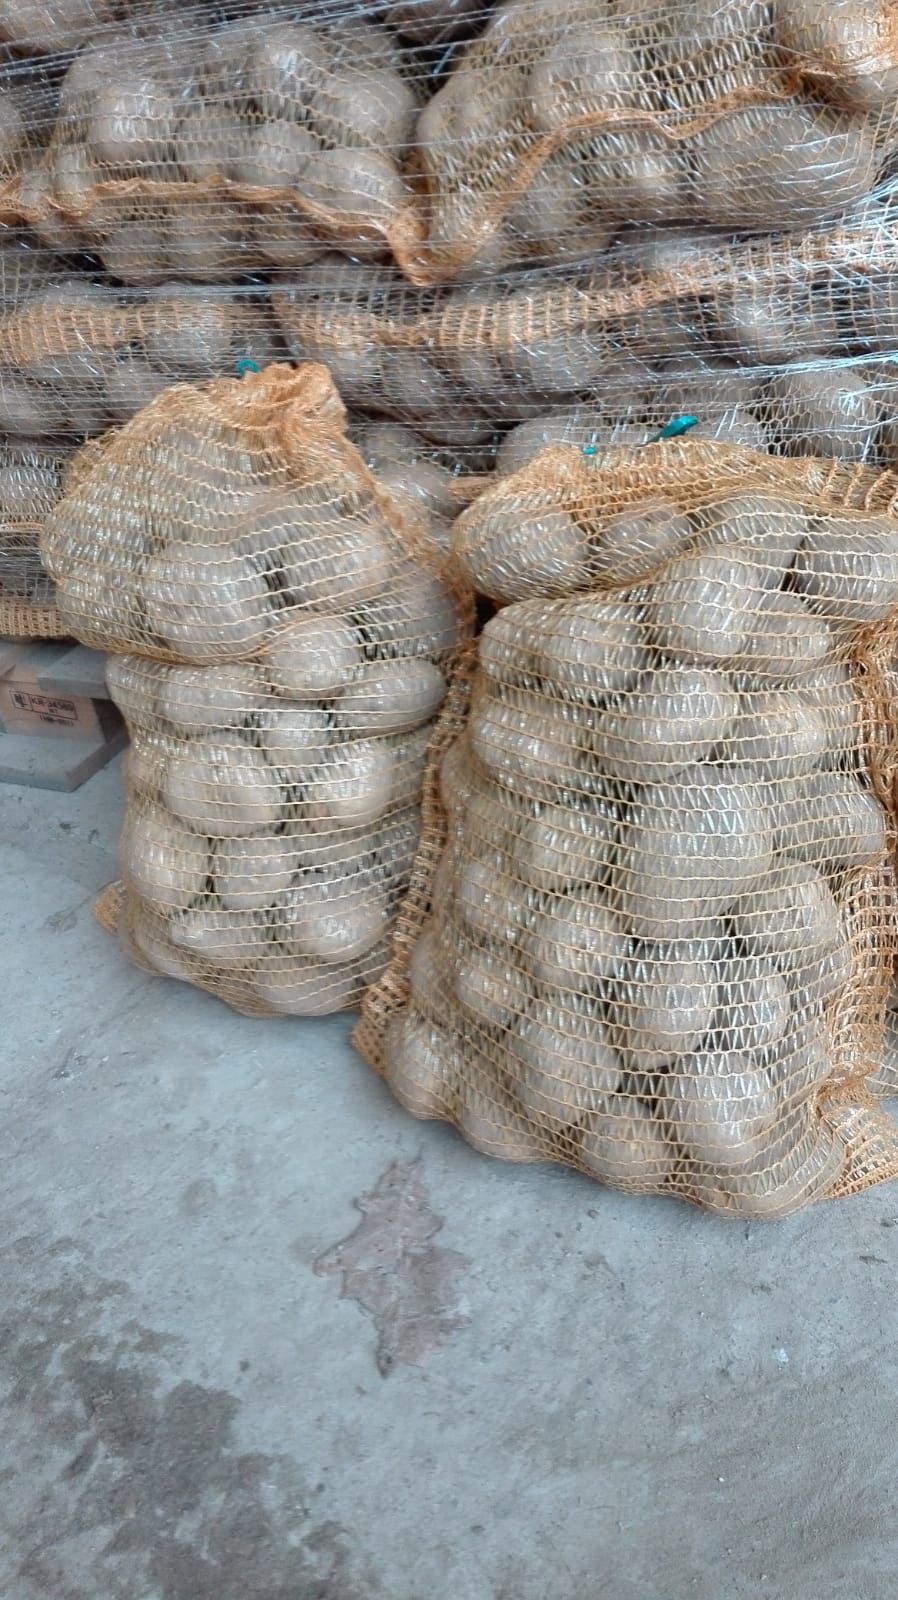 Ziemniaki od Producenta Gala, Vineta, Bellarosa i inne. Transport